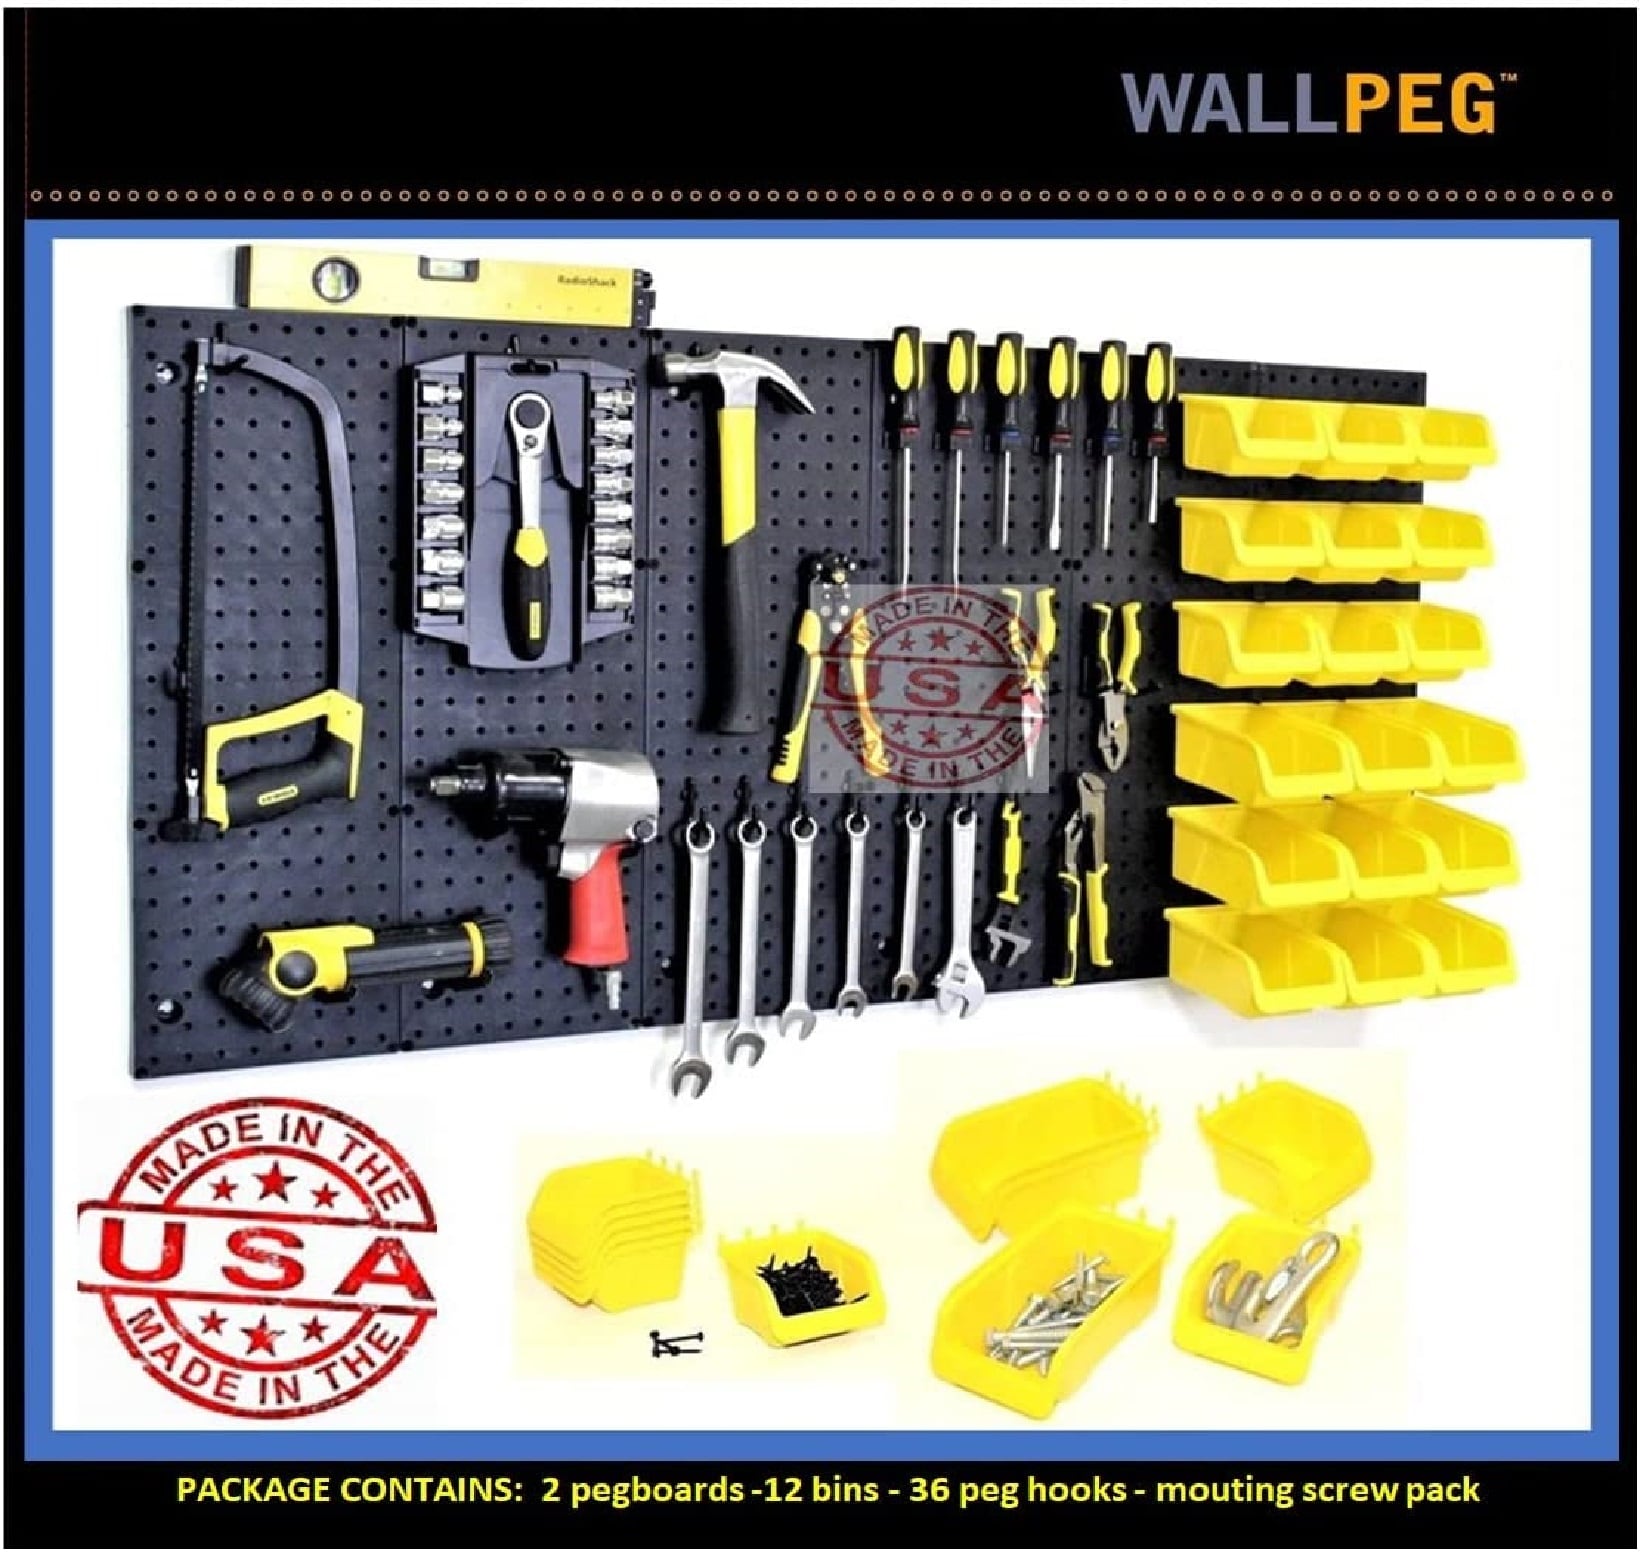 WallPeg 4 Medium Yellow Bins and 36 Assorted Flex Lock Peg Hooks